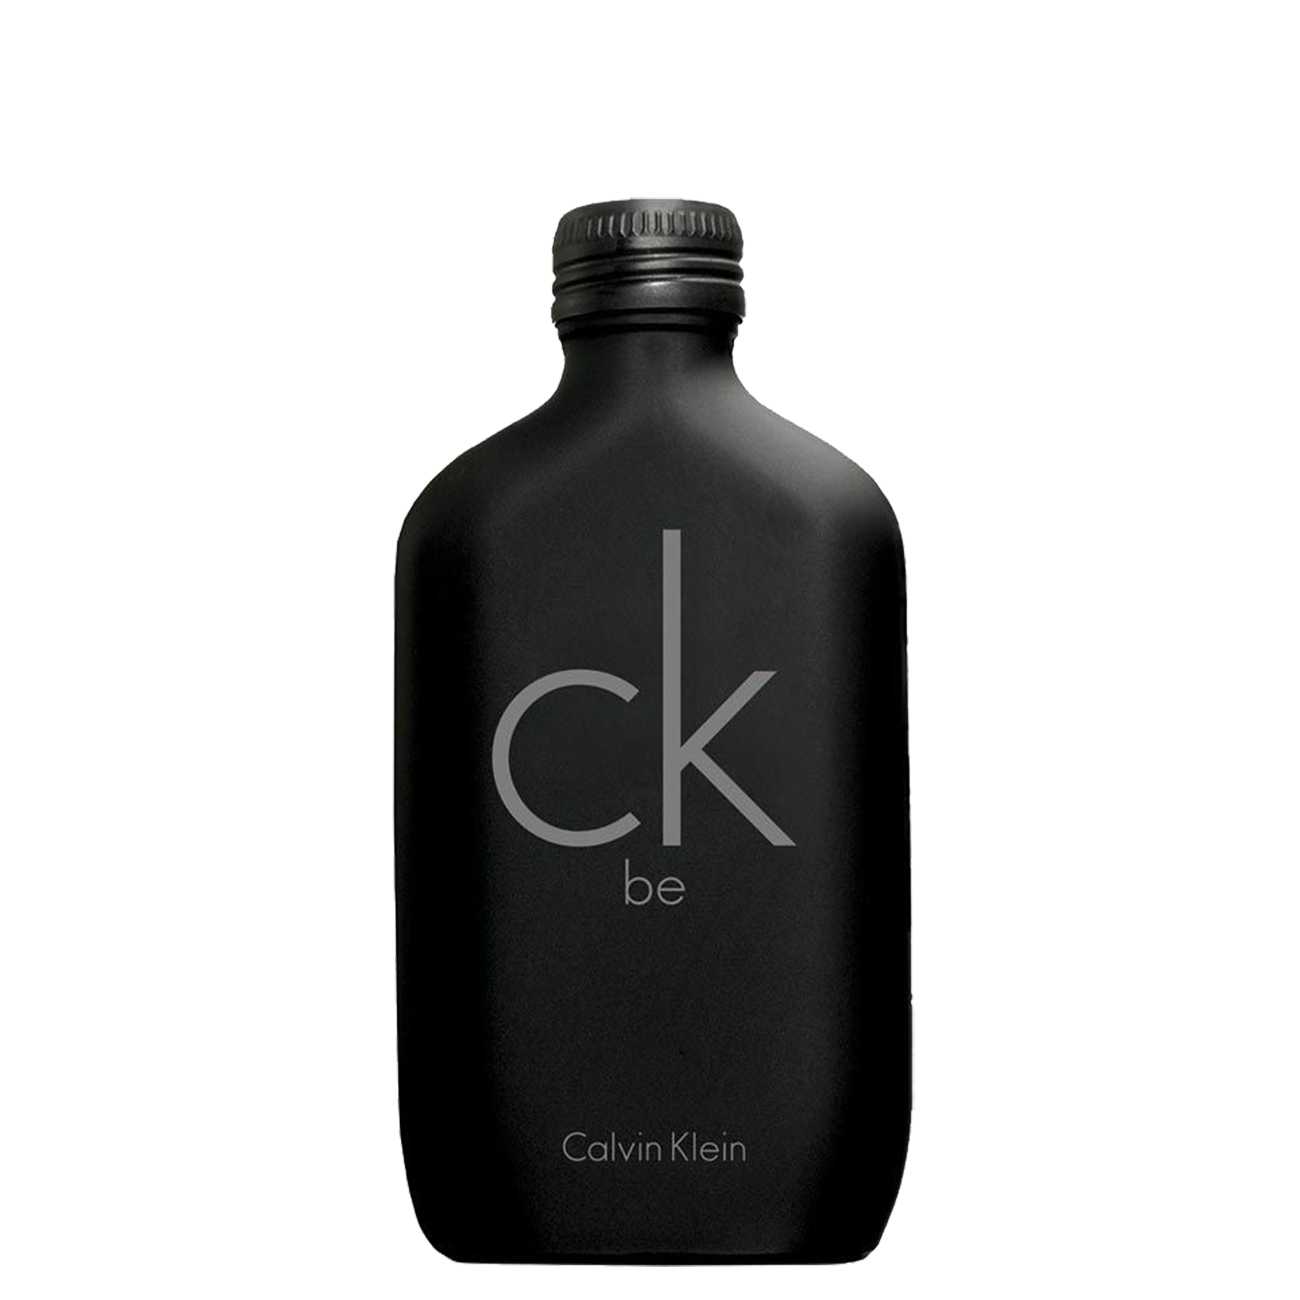 Apa de Toaleta Calvin Klein CK BE 100ml cu comanda online